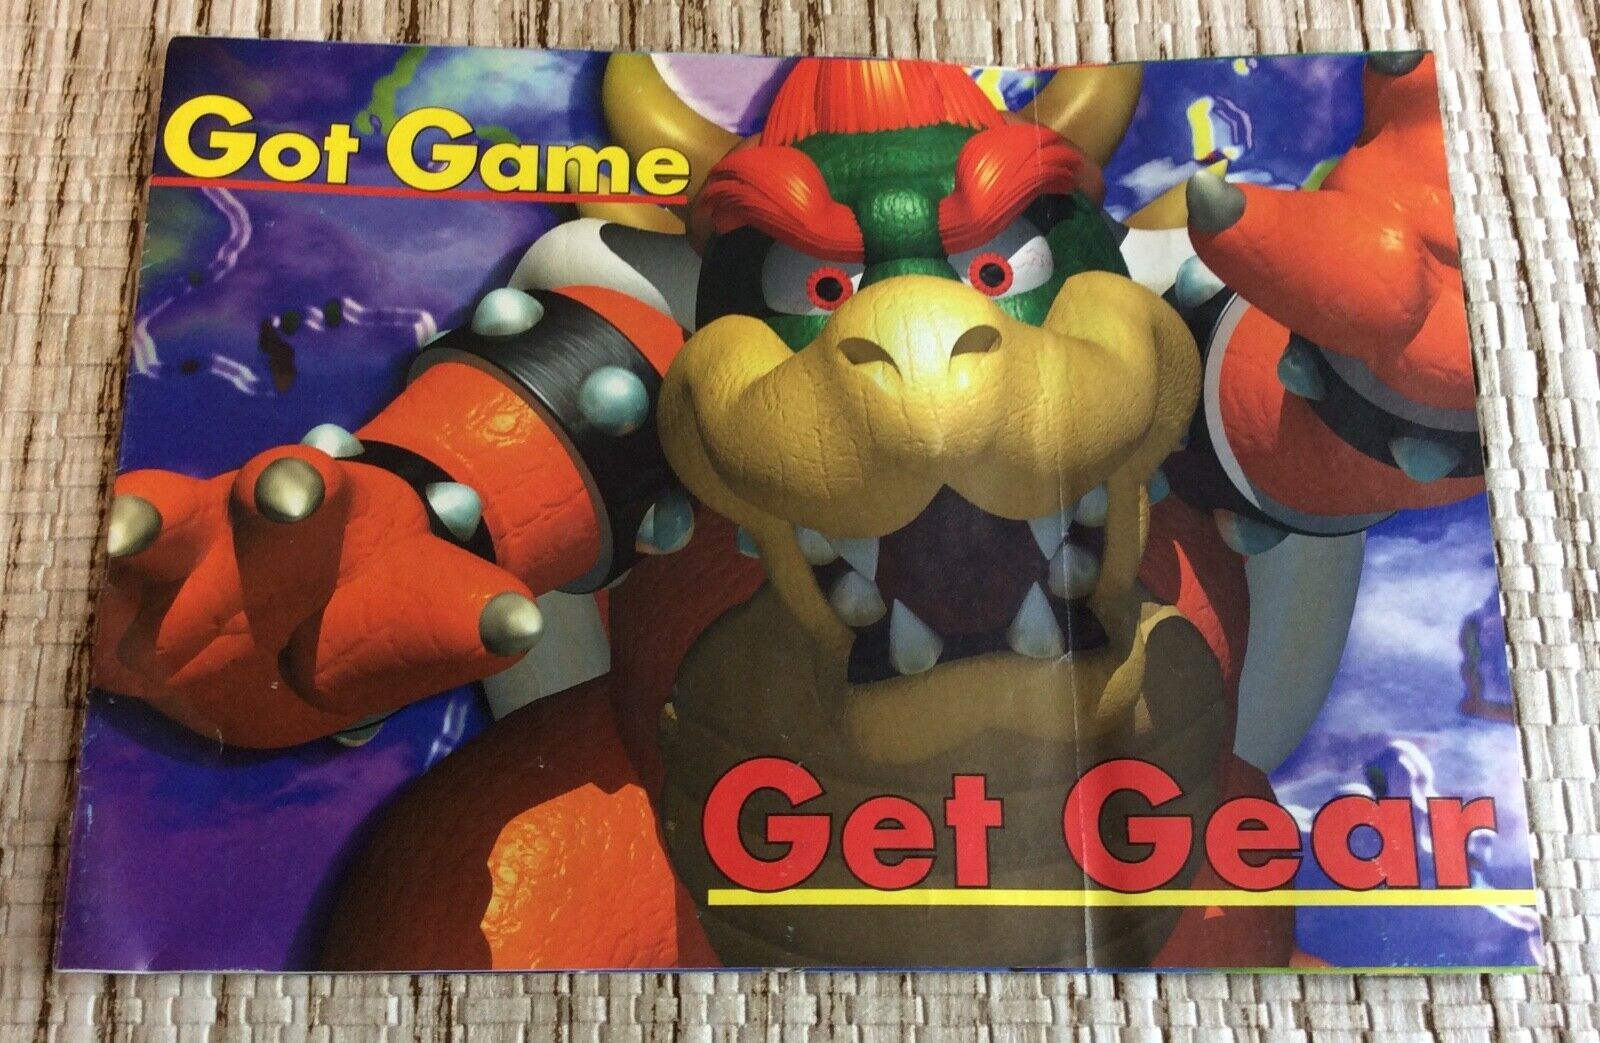 Got Game Get Gear Nintendo Power Card ONLY Authentic Original